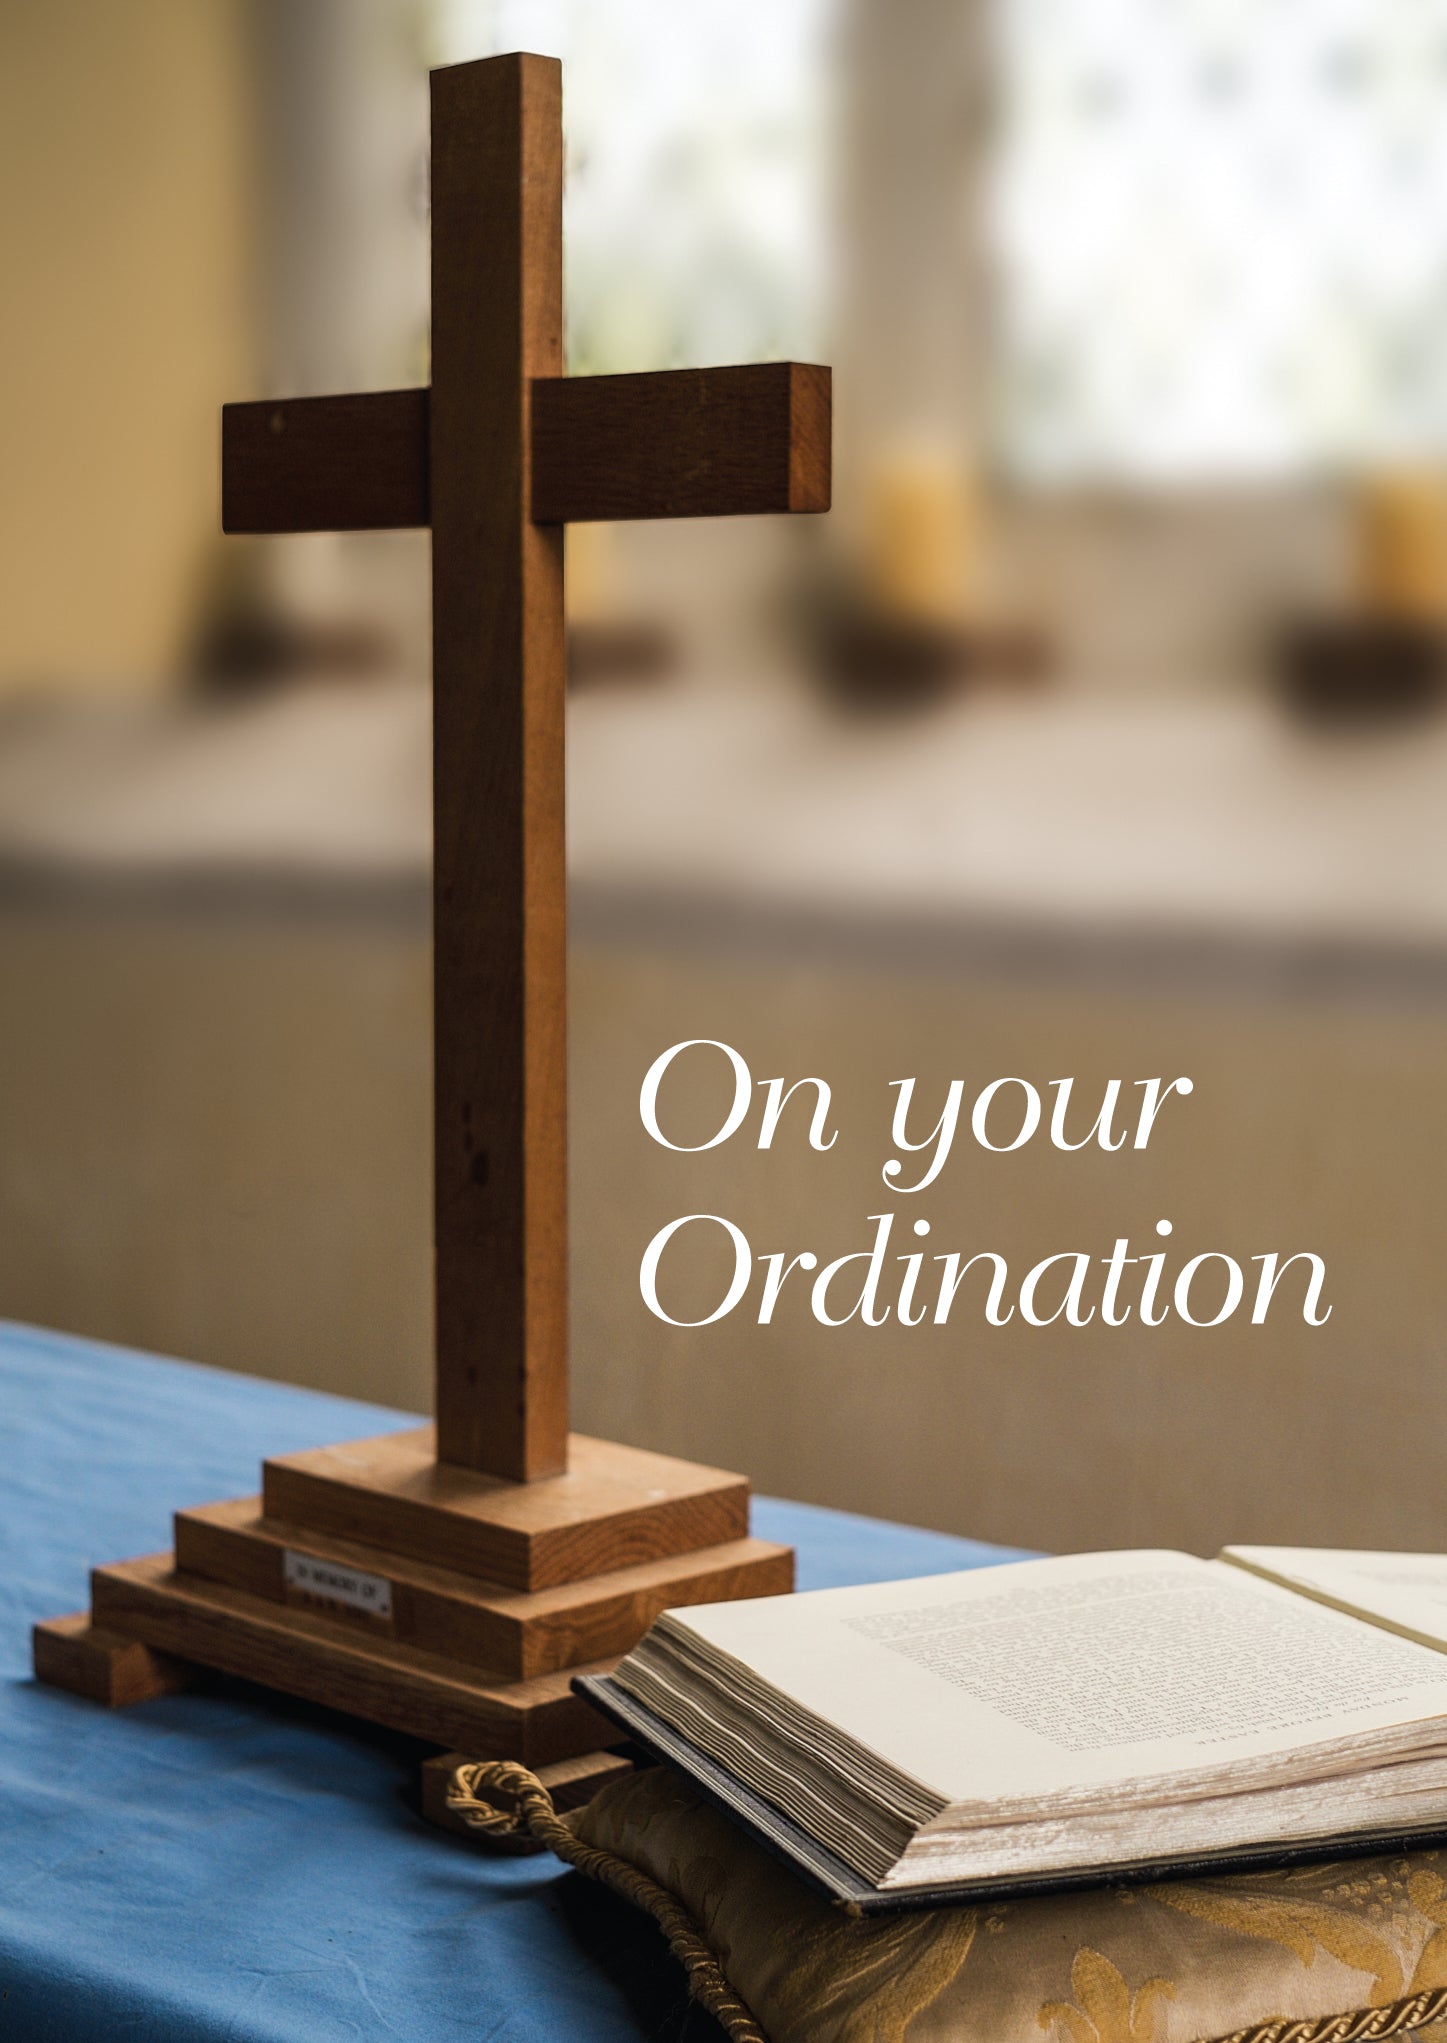 OrdinationOrdination